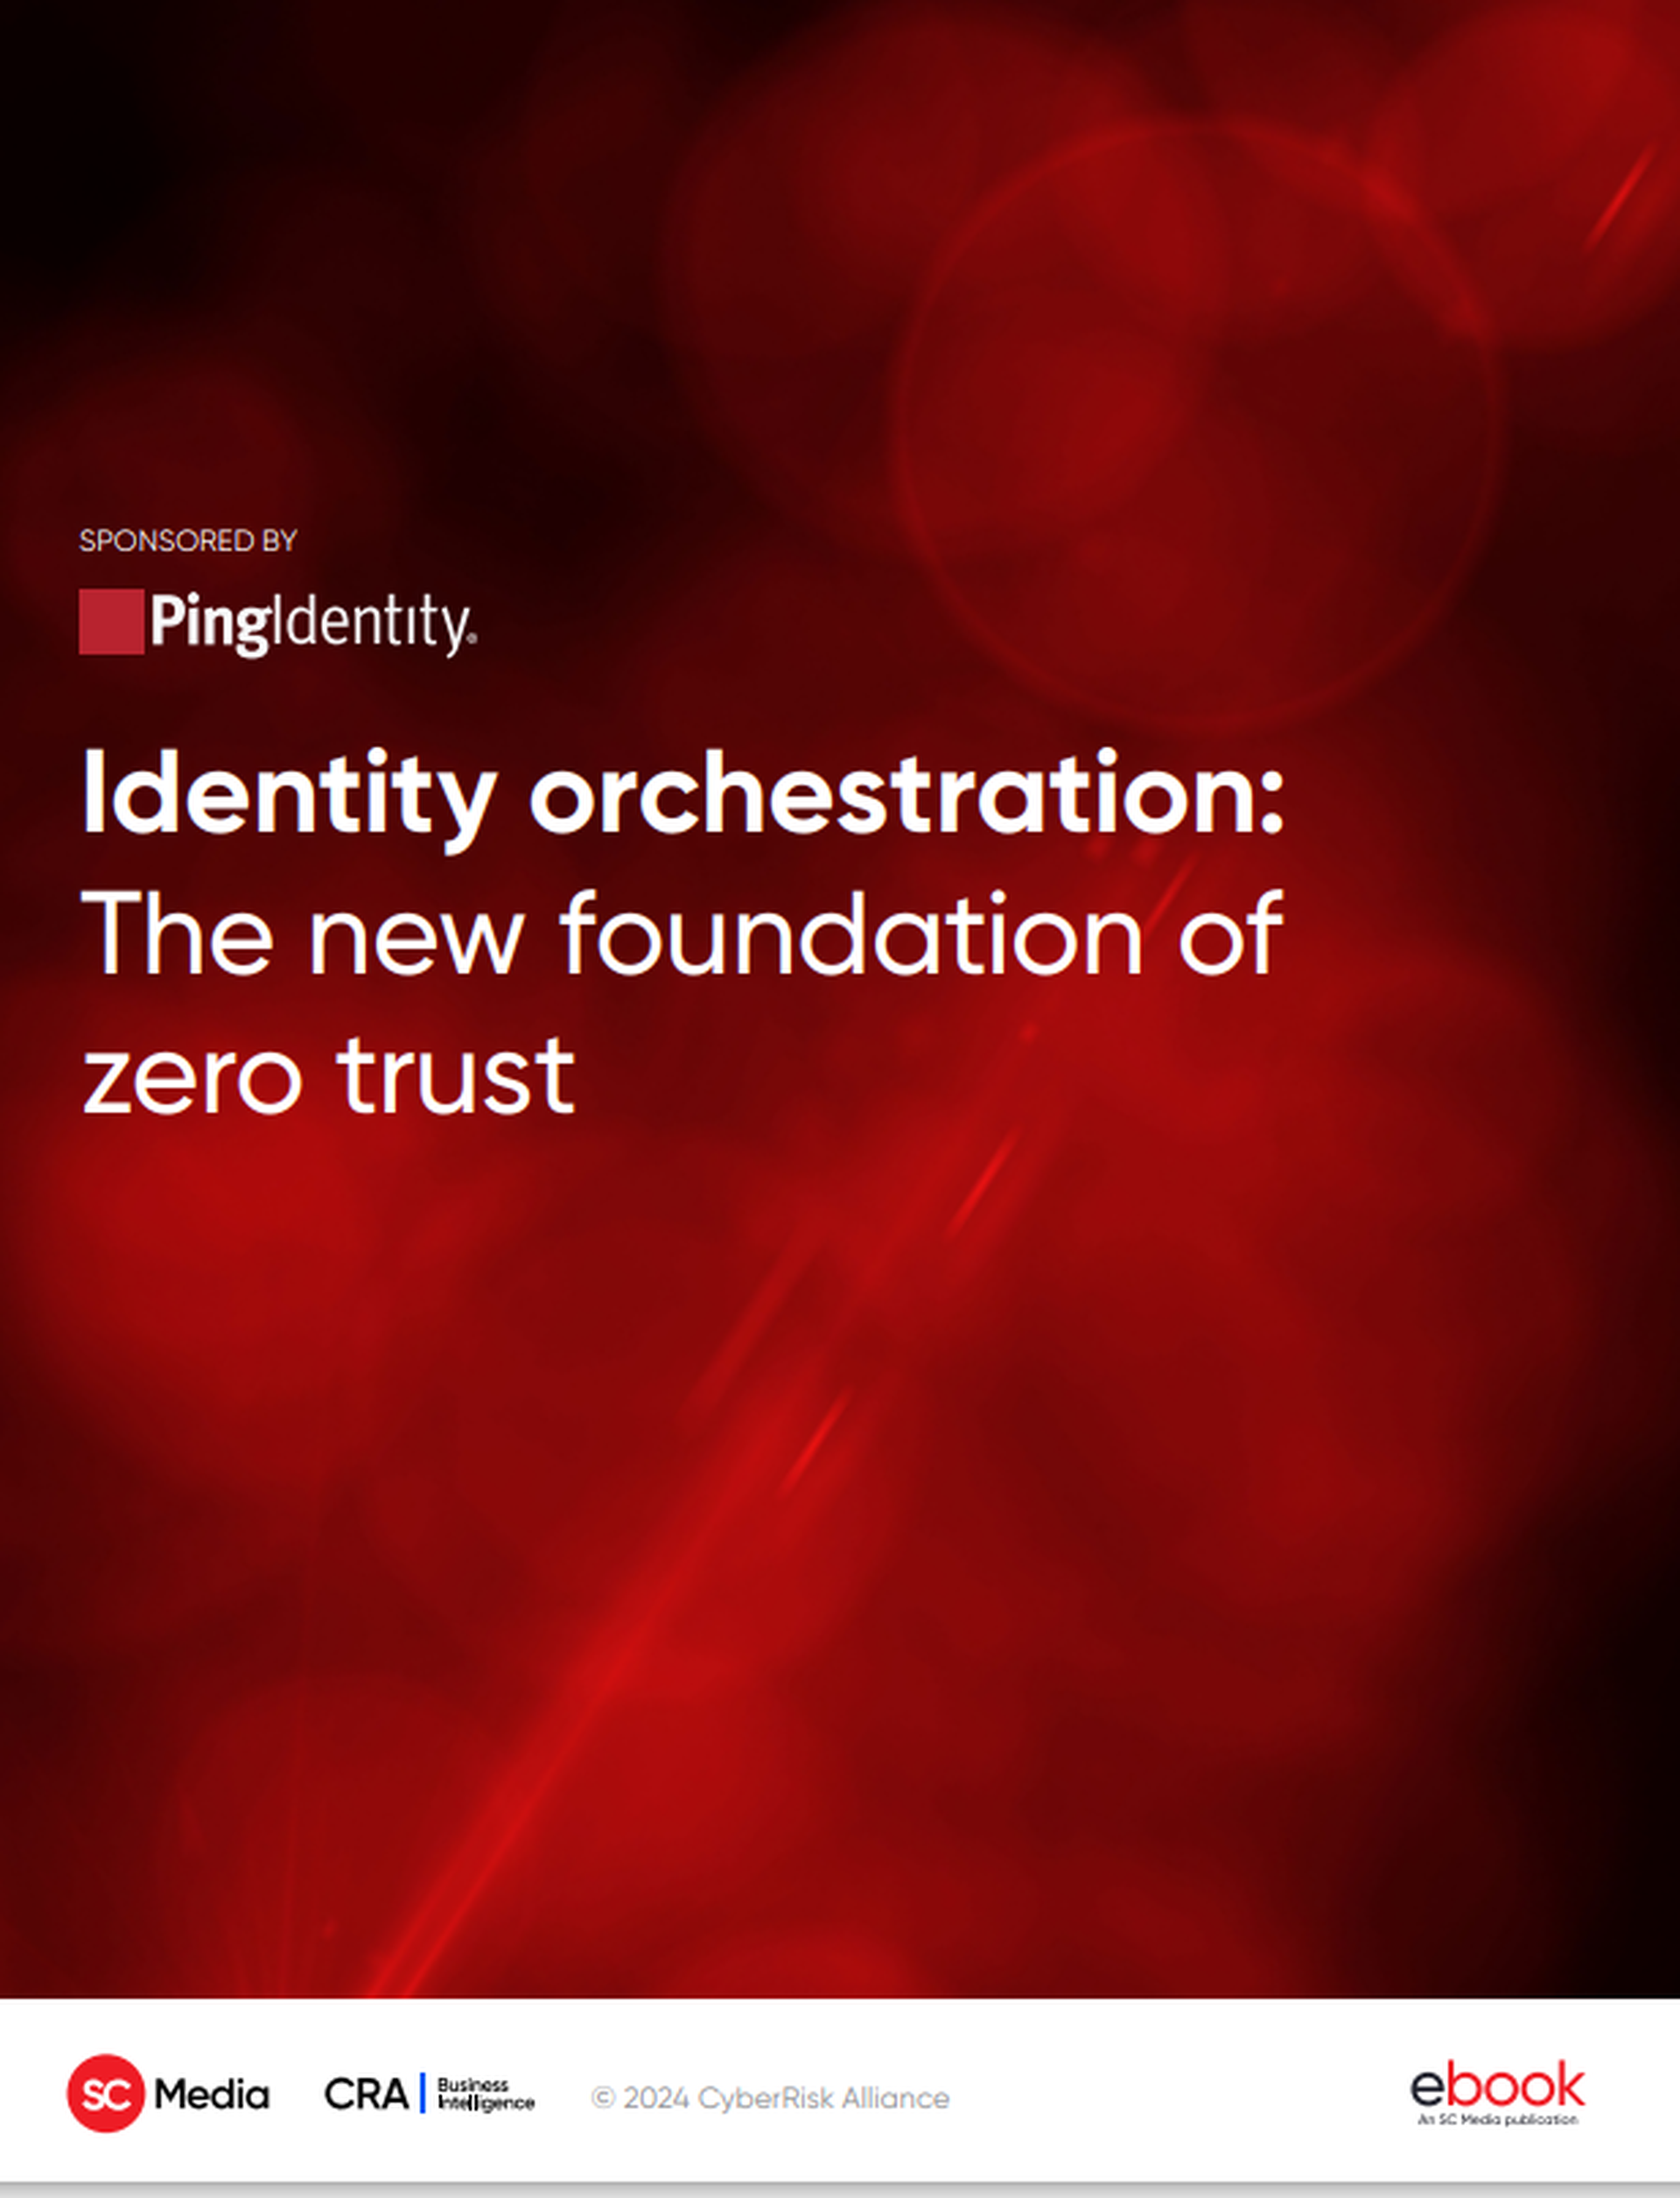 Identity orchestration: The foundation of zero trust